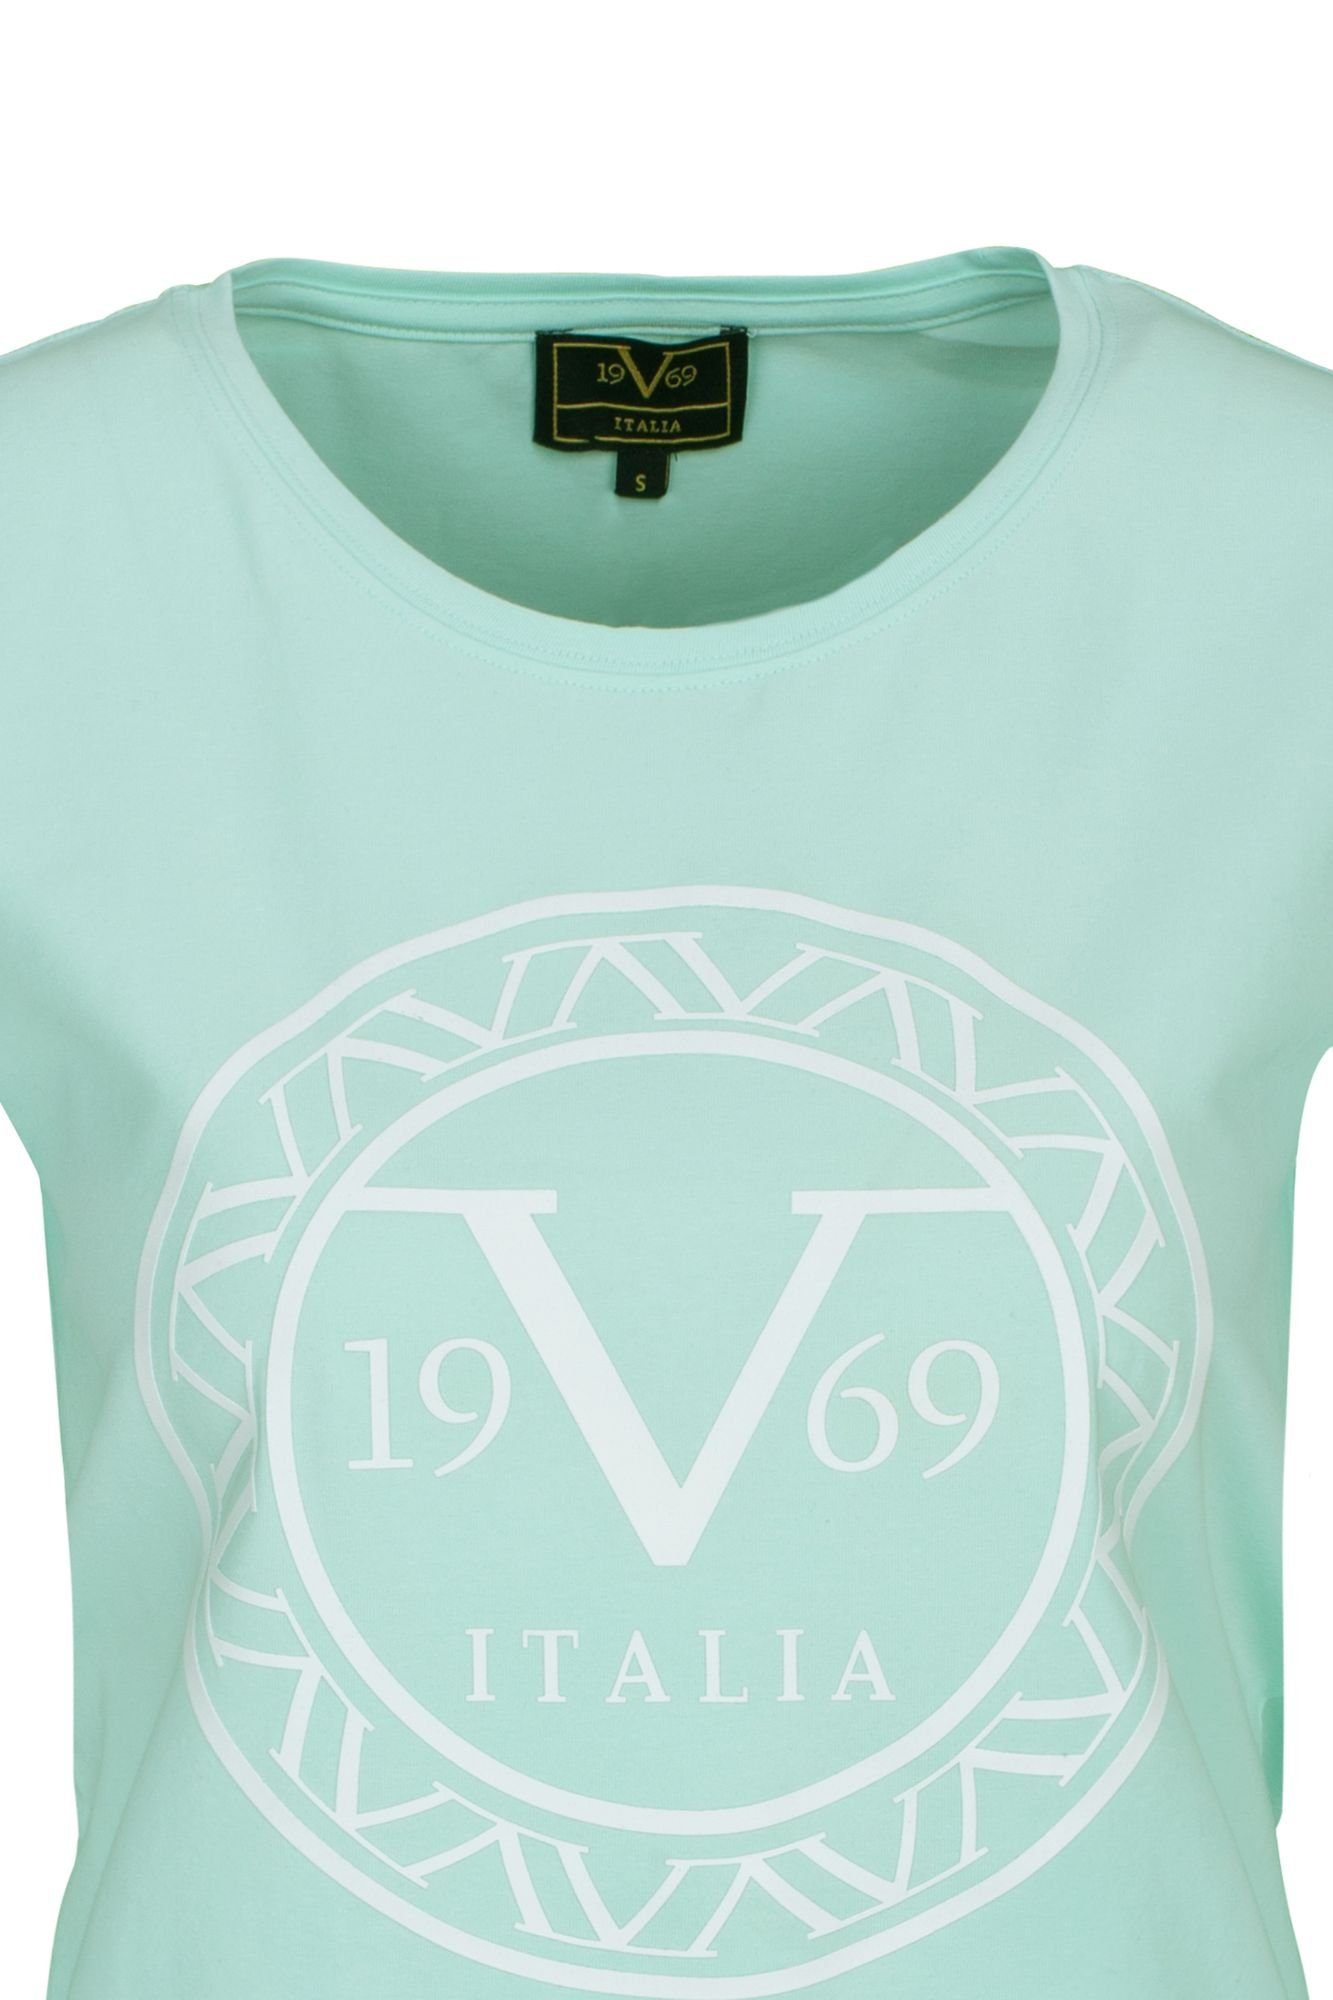 T-Shirt Italia 19V69 Irina by Versace